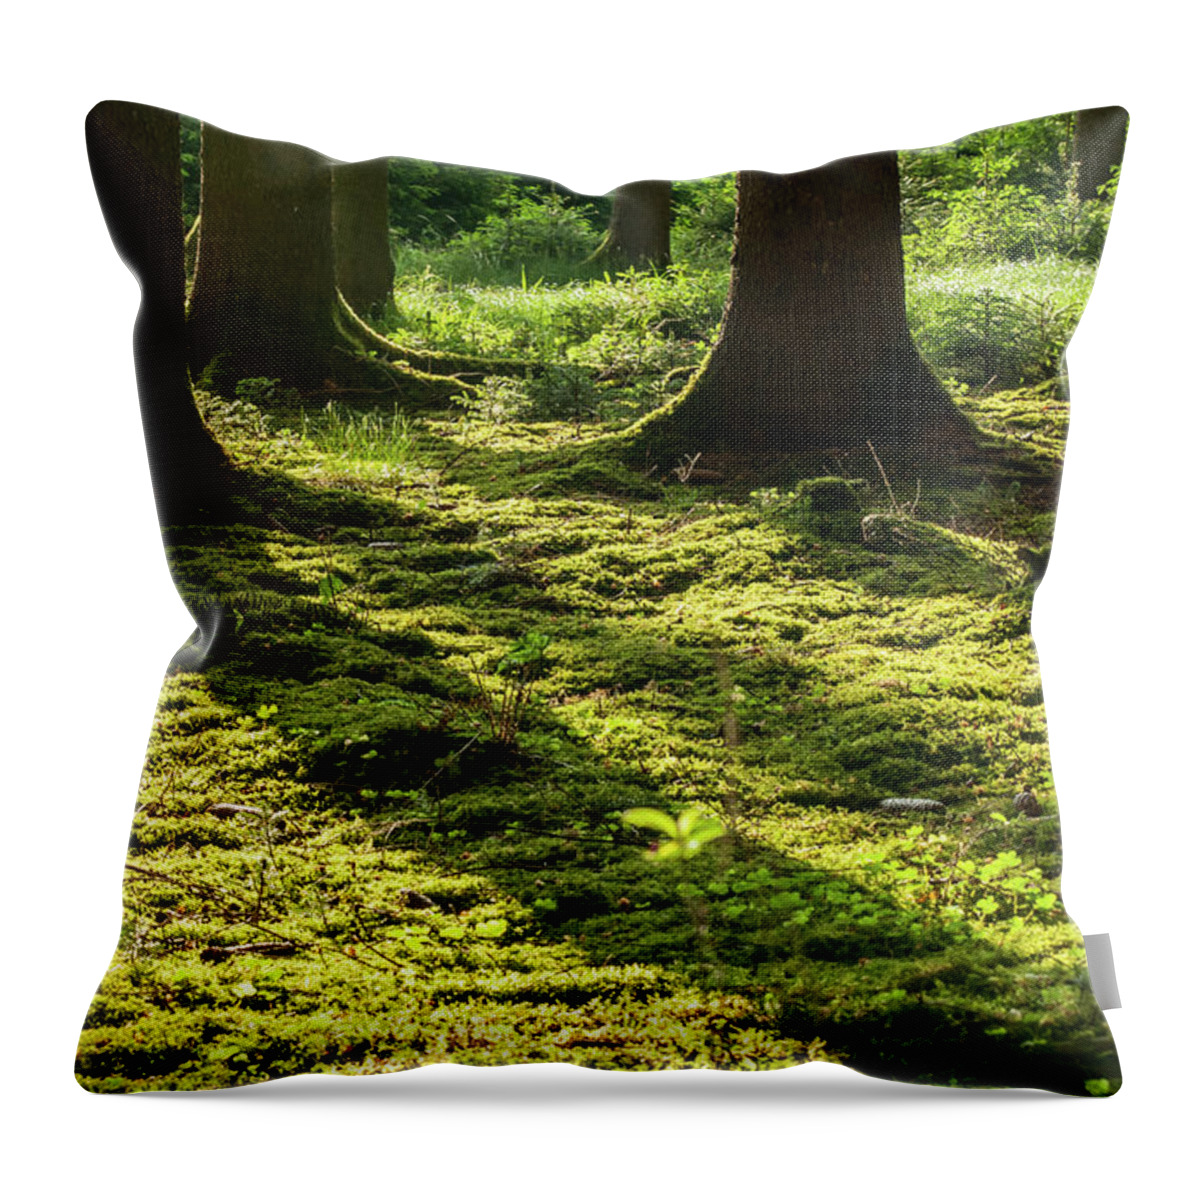 Shadow Throw Pillow featuring the photograph Moss On Forest Floor by Norbert Kurzka - Photography